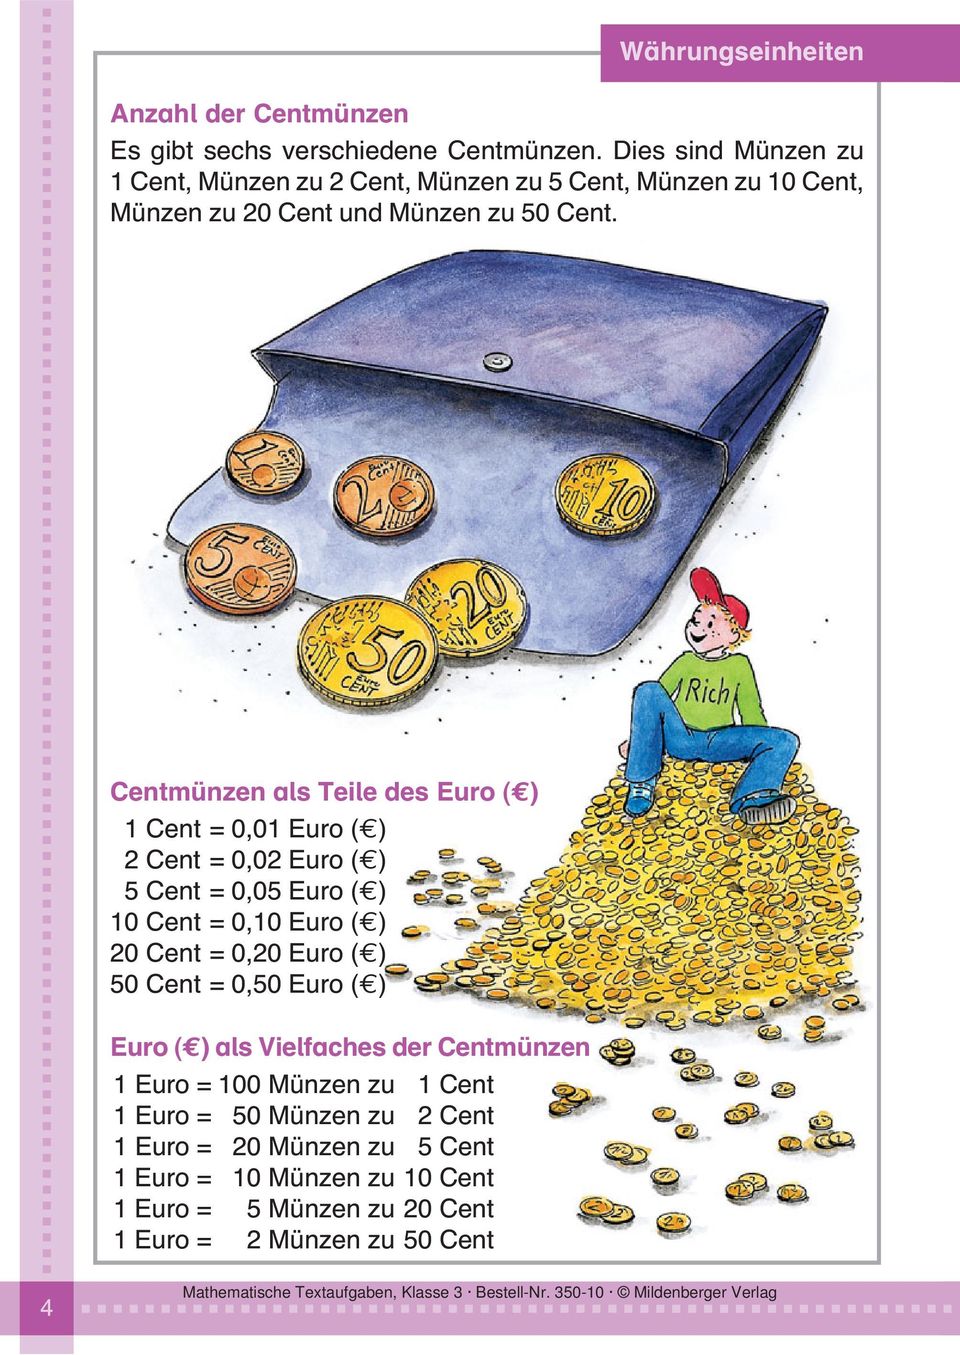 Centmünzen als Teile des Euro ( ) 11 Cent = 0,01 Euro ( ) 12 Cent = 0,02 Euro ( ) 15 Cent = 0,05 Euro ( ) 10 Cent = 0,10 Euro ( ) 20 Cent = 0,20 Euro